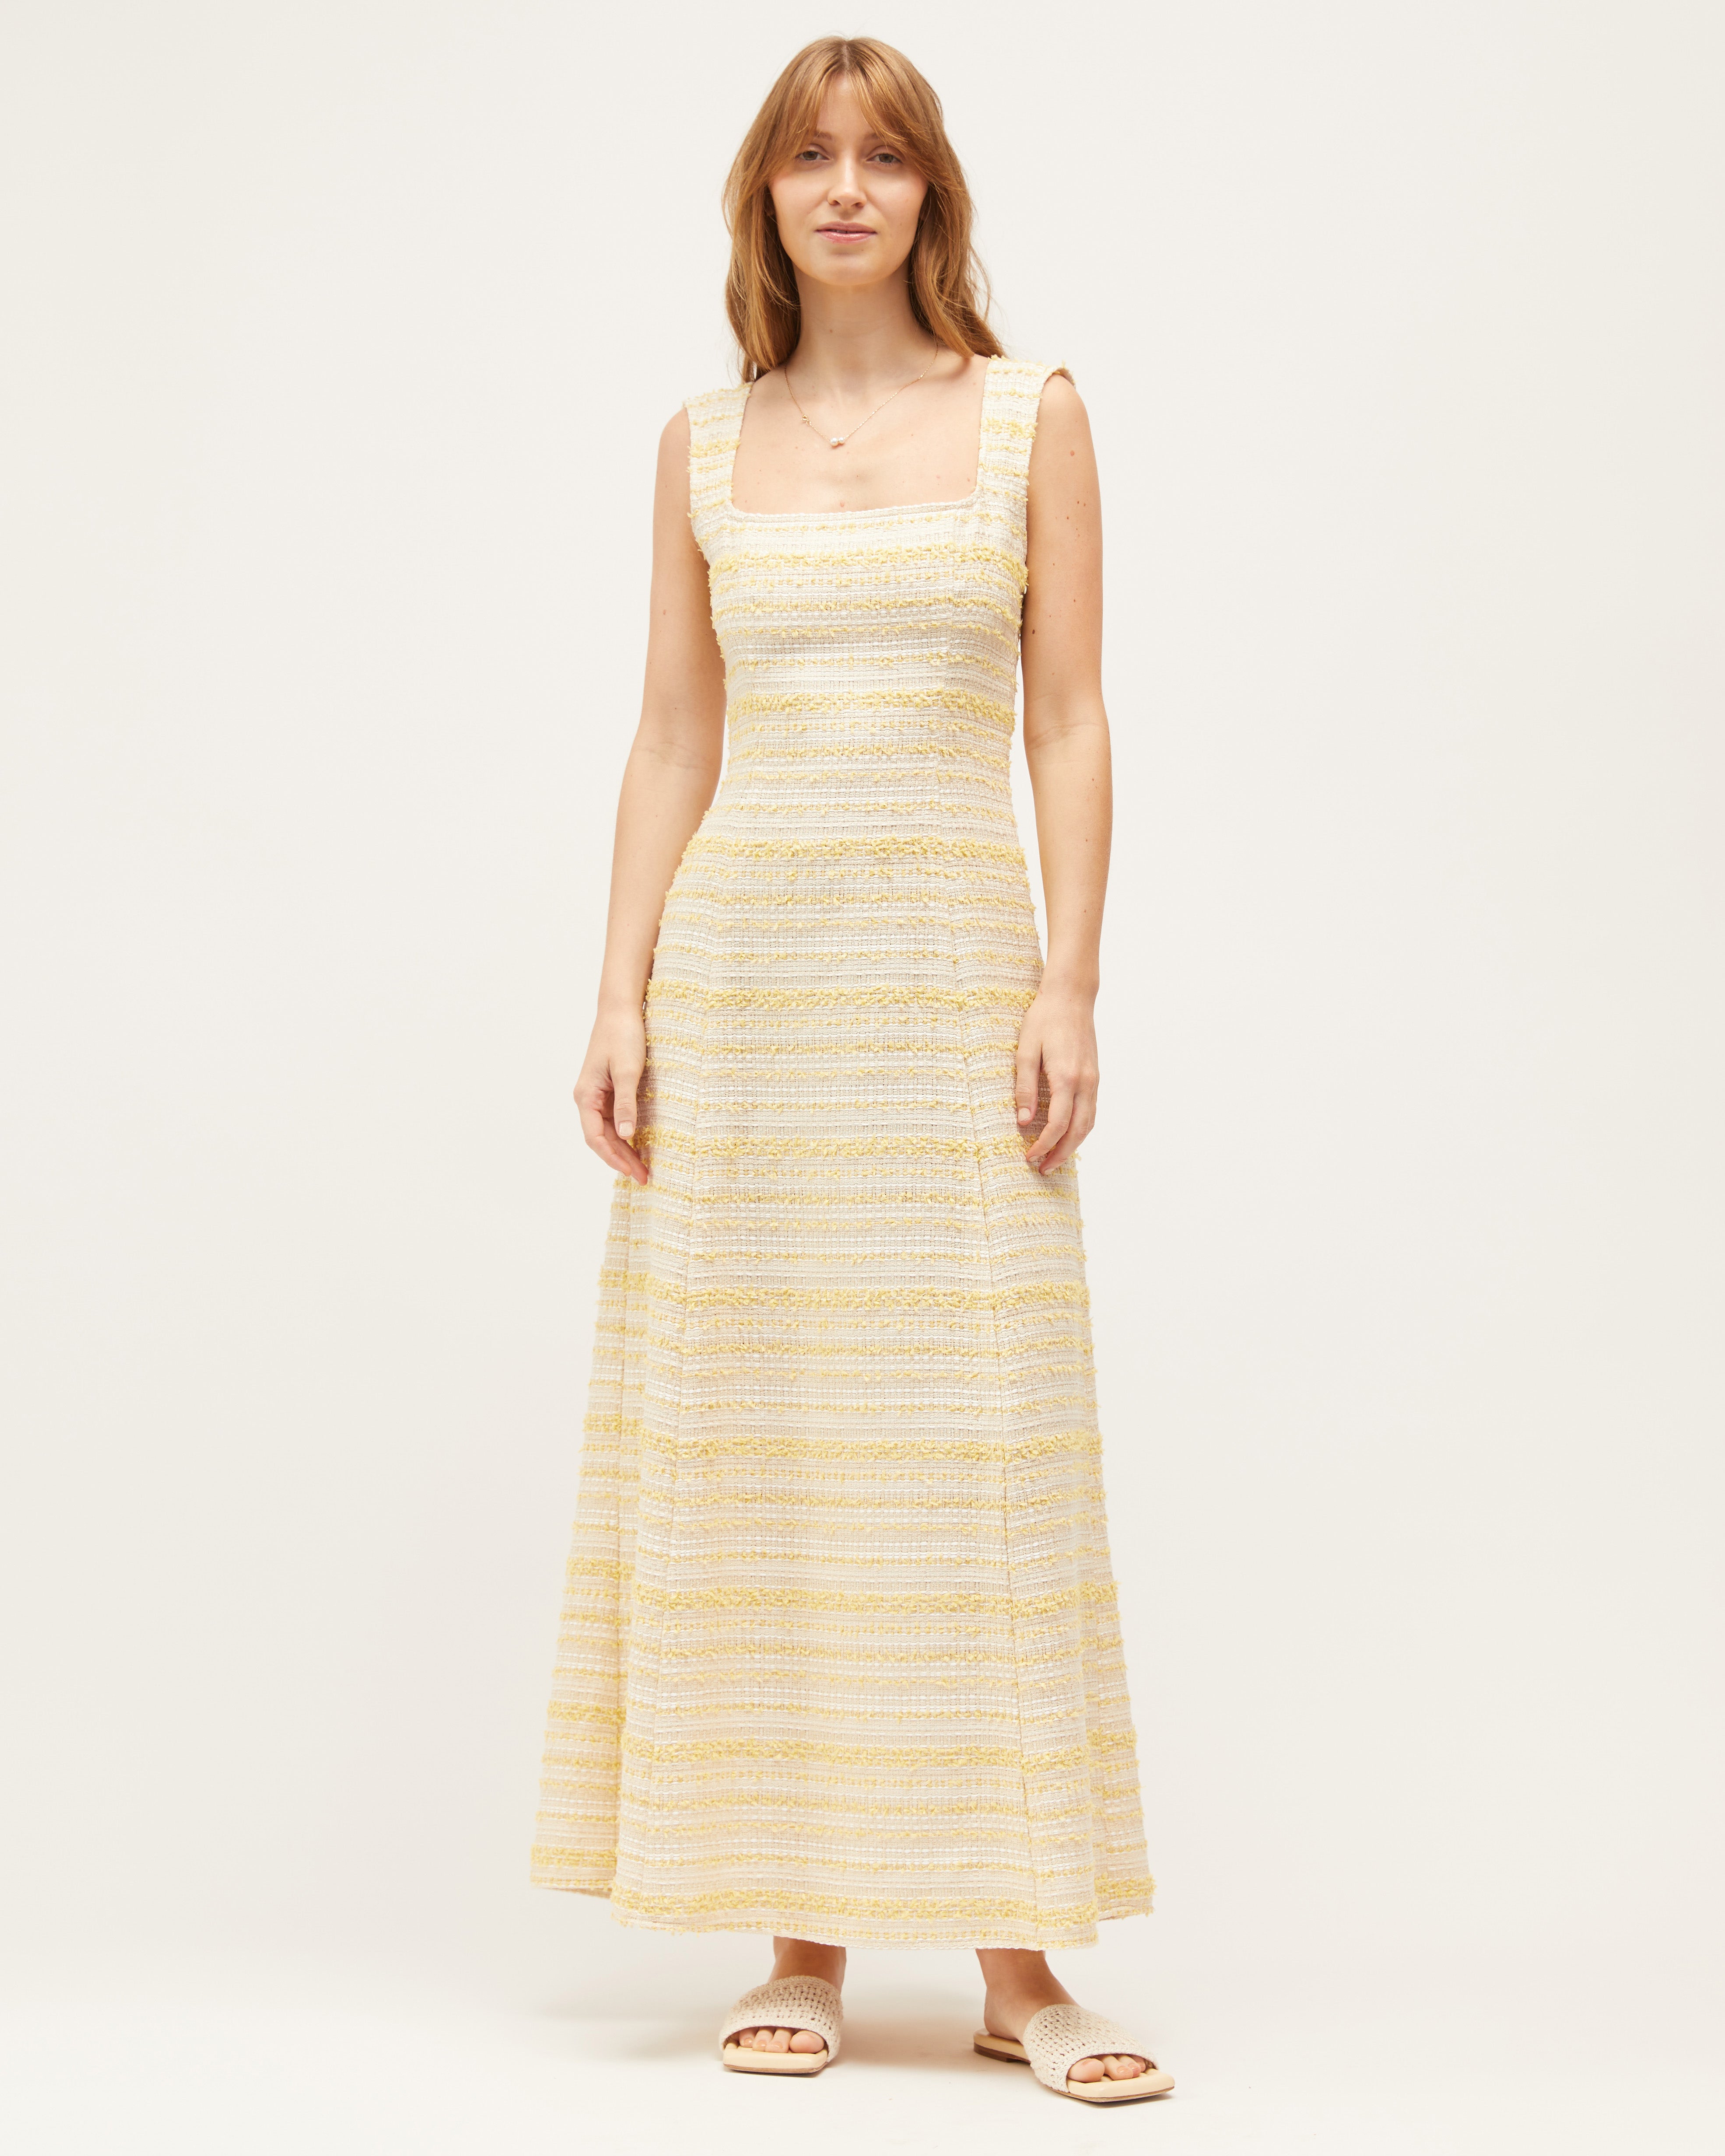 Naia Dress | Butter $690